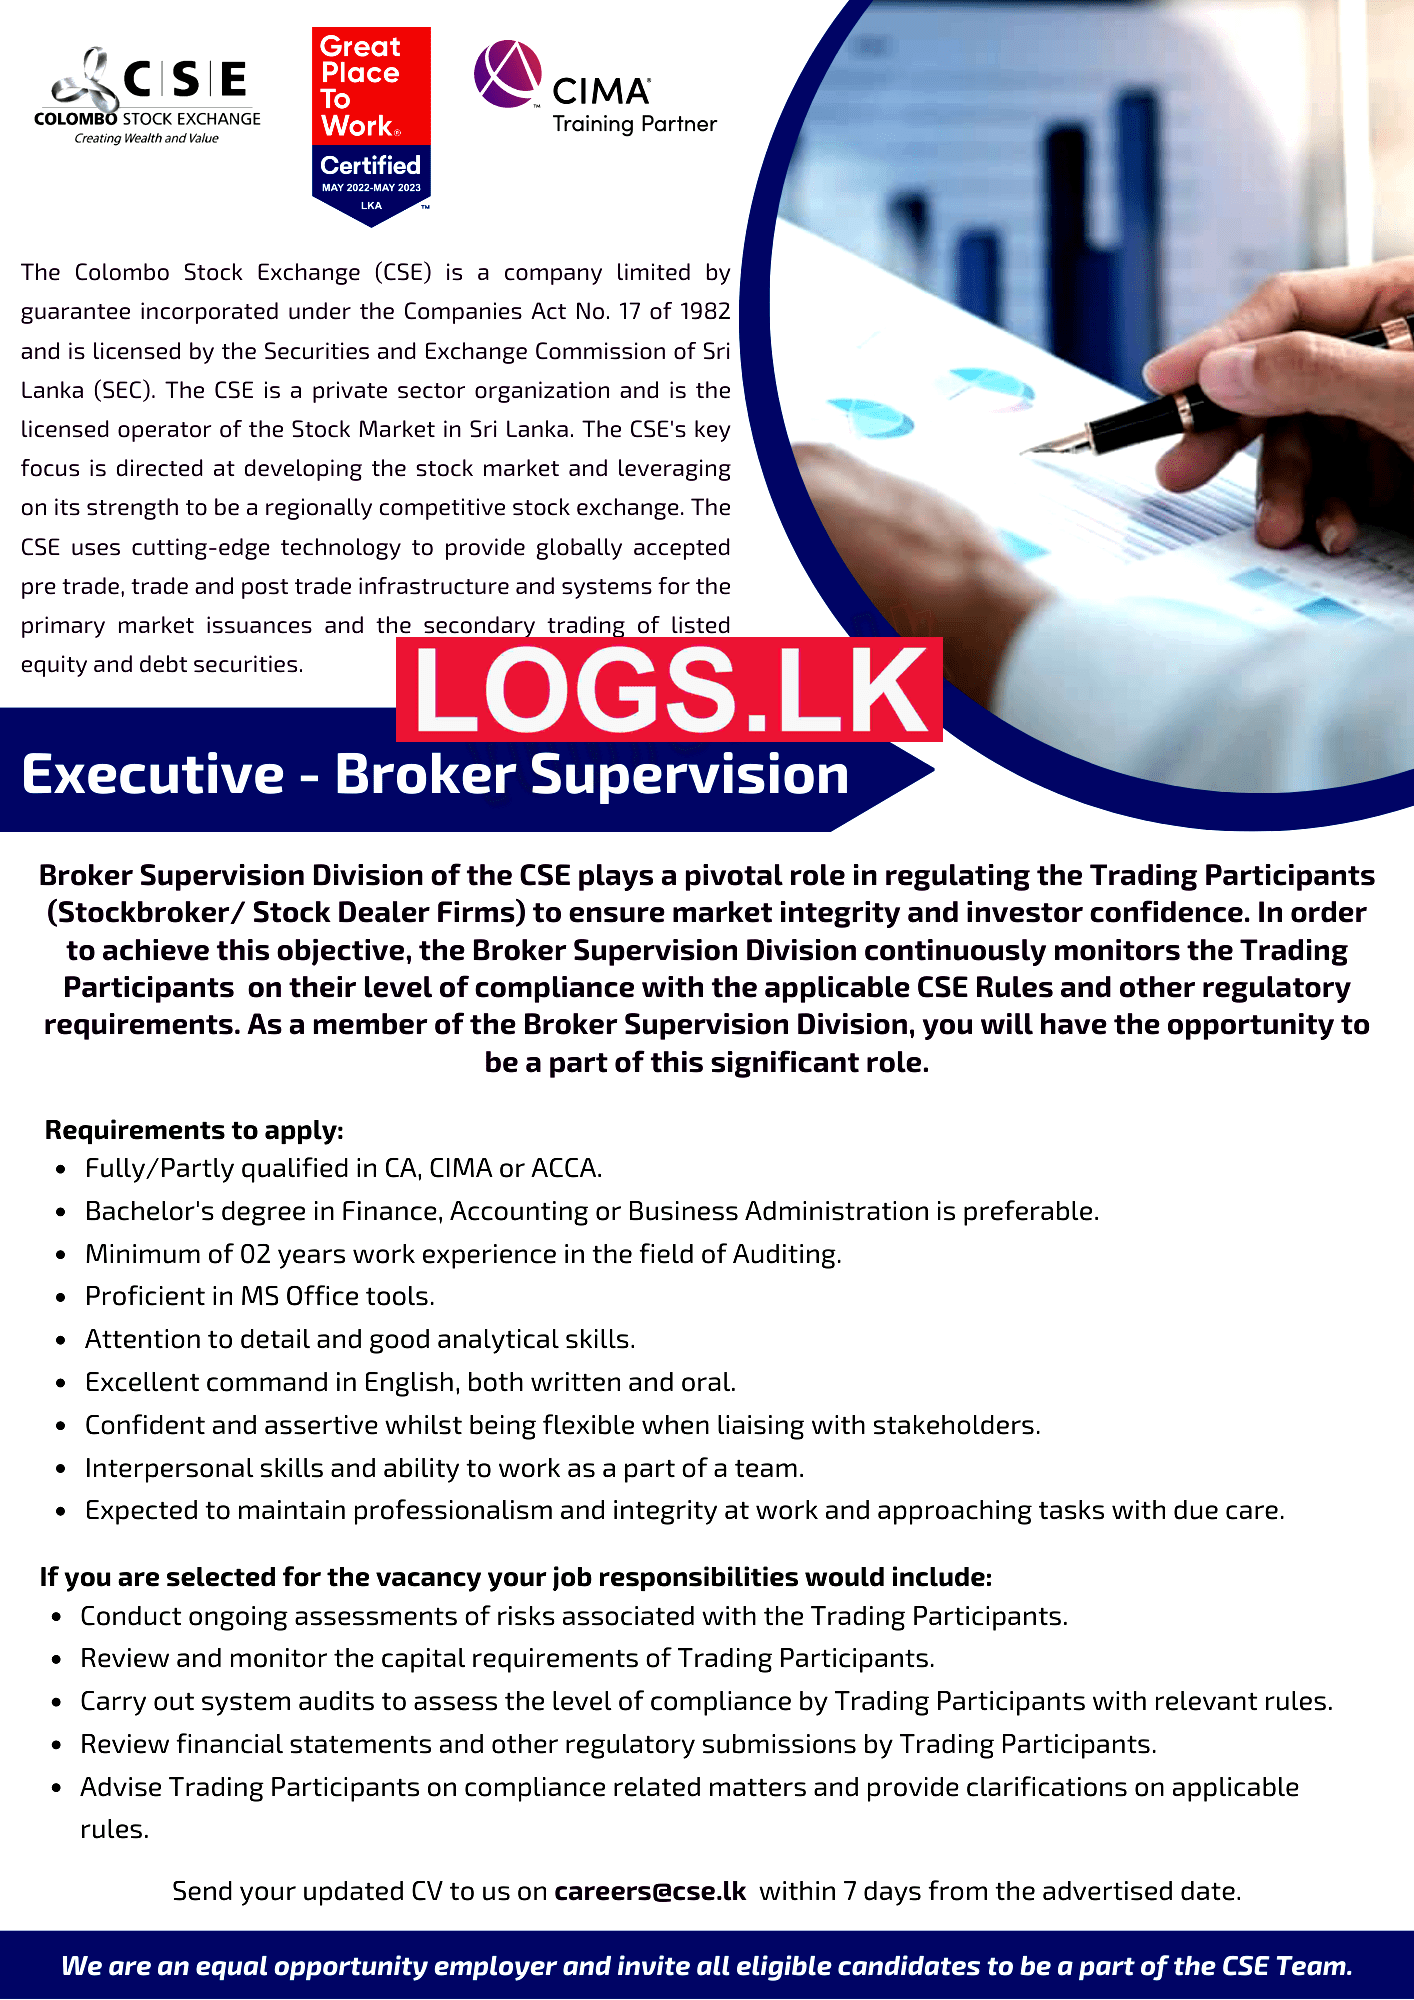 Executive (Broker Supervision) - Colombo Stock Exchange Vacancies 2023 Jobs Application